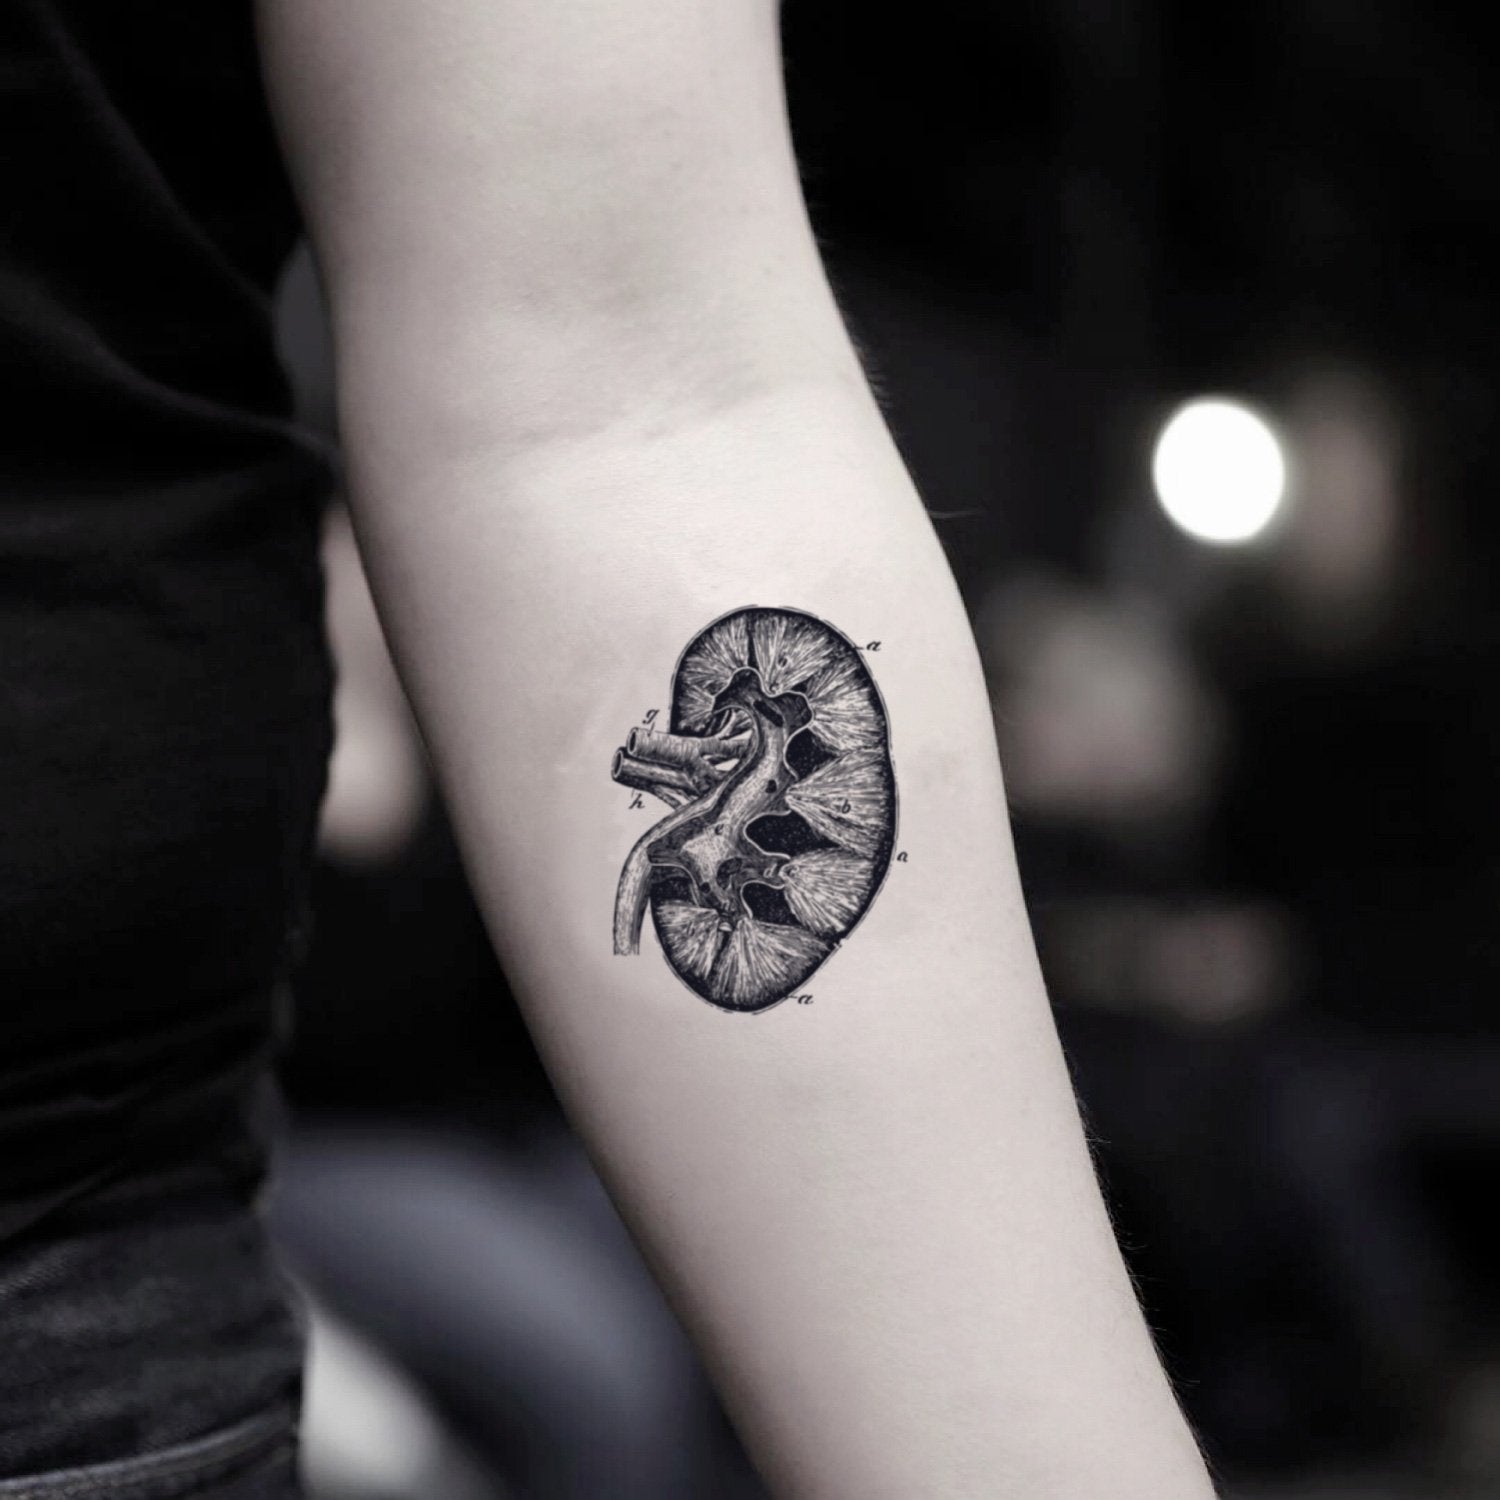 fake small kidney organ donor illustrative temporary tattoo sticker design idea on inner arm